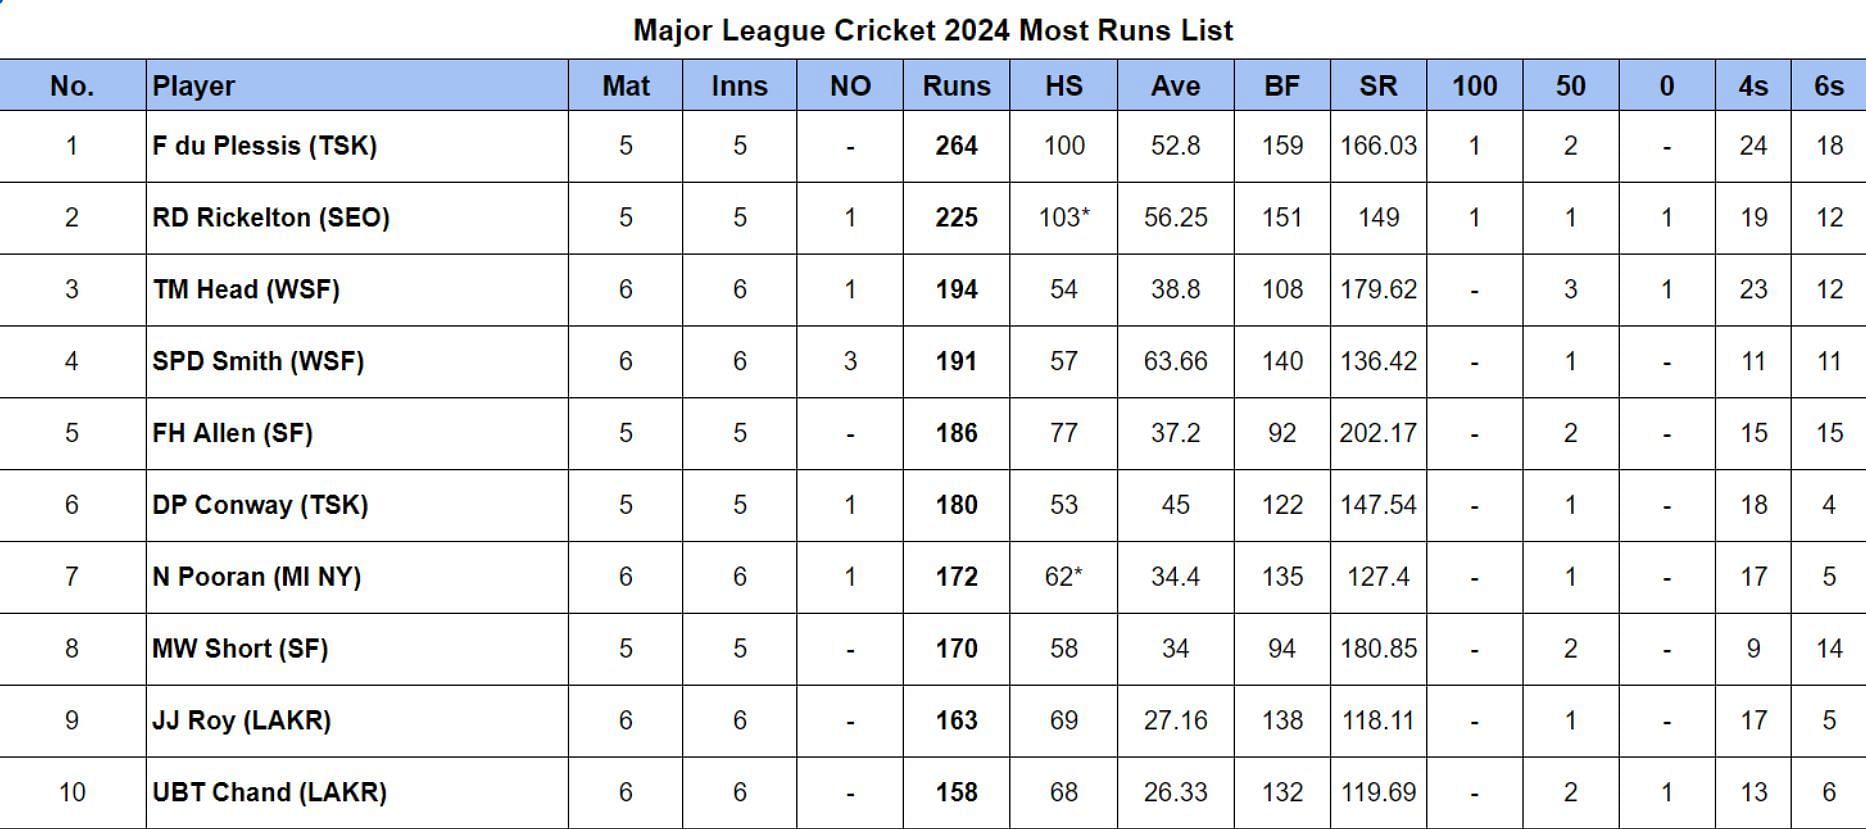 MLC 2024: Most Runs and Most Wickets after Los Angeles Knight Riders vs MI New York (Updated) ft. Rashid Khan & Nicholas Pooran